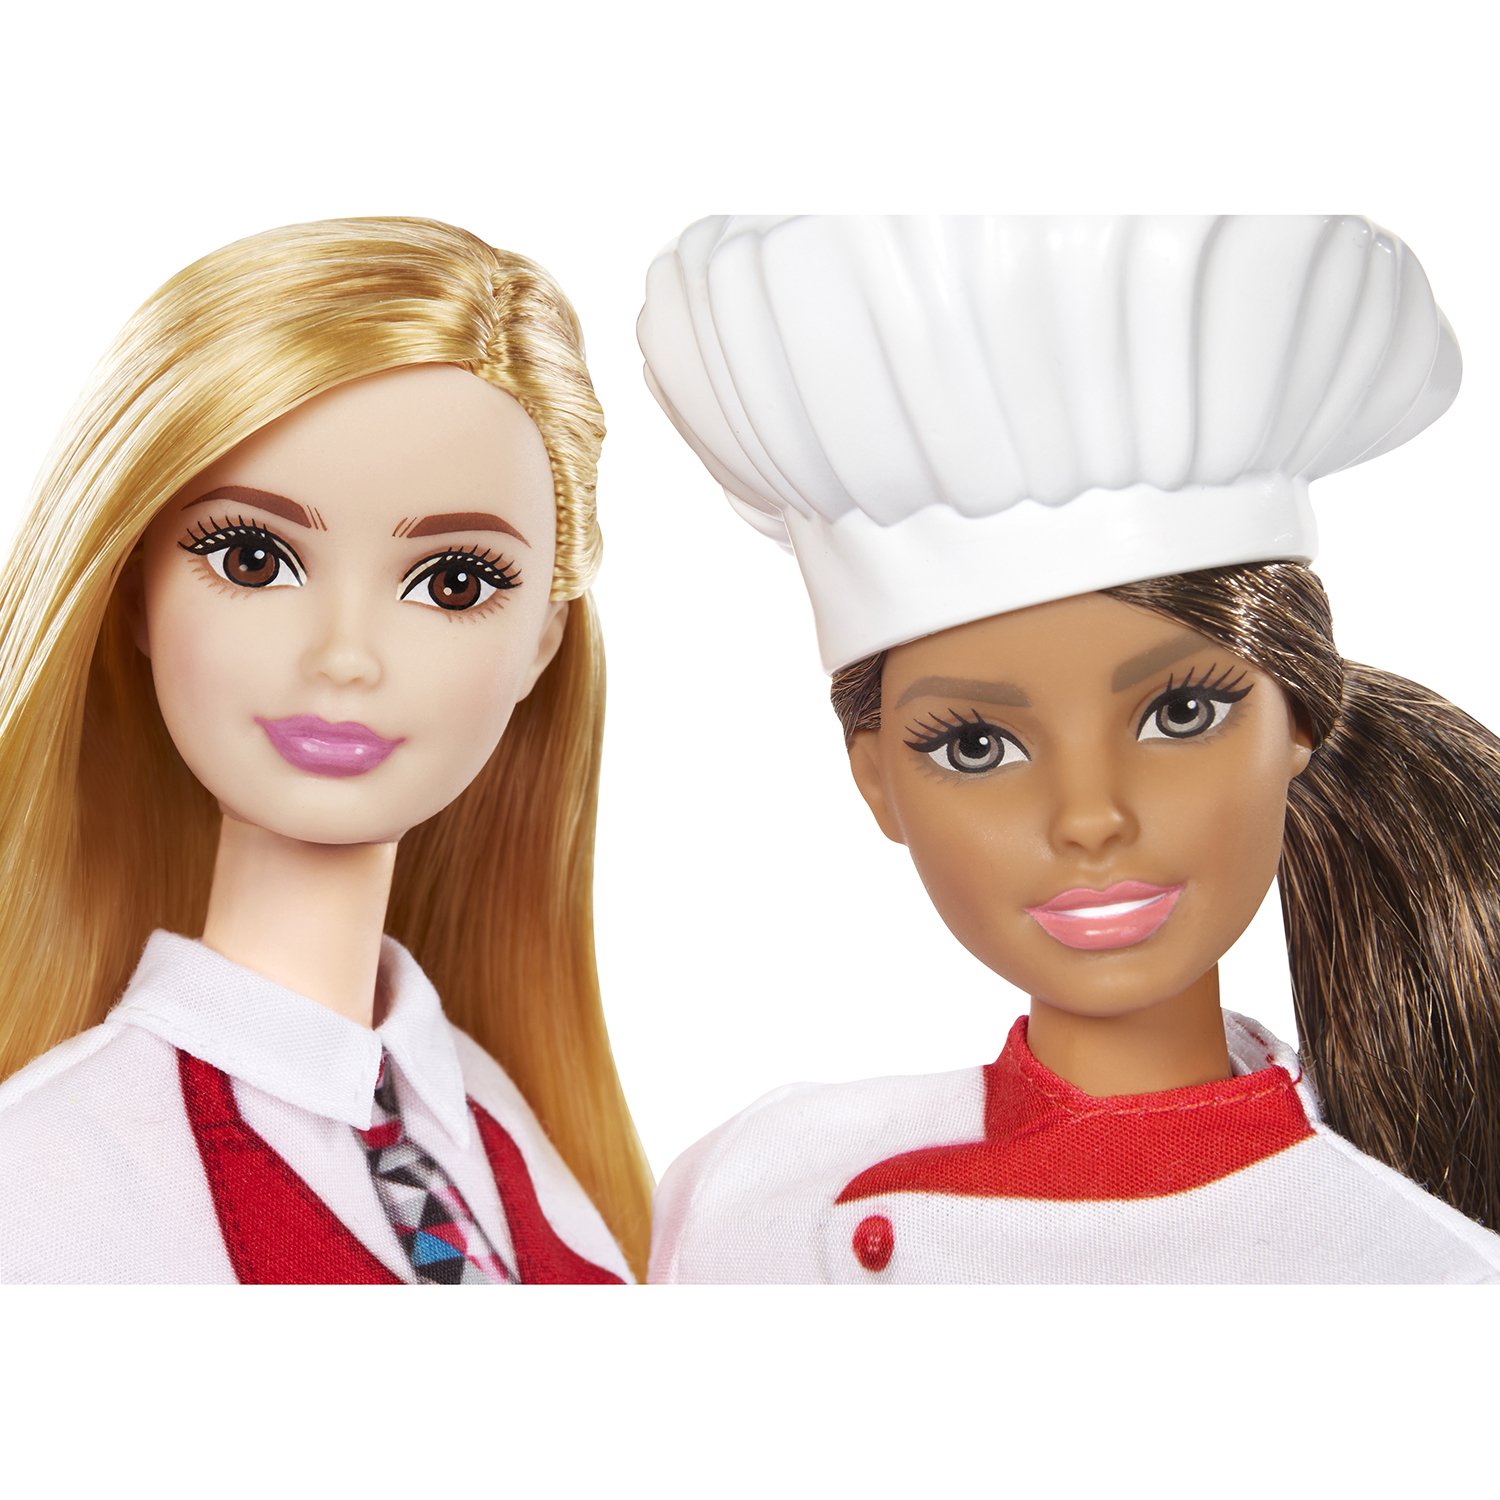 Набор Barbie Барби и друзья Кухня Повар и официант, FCP66